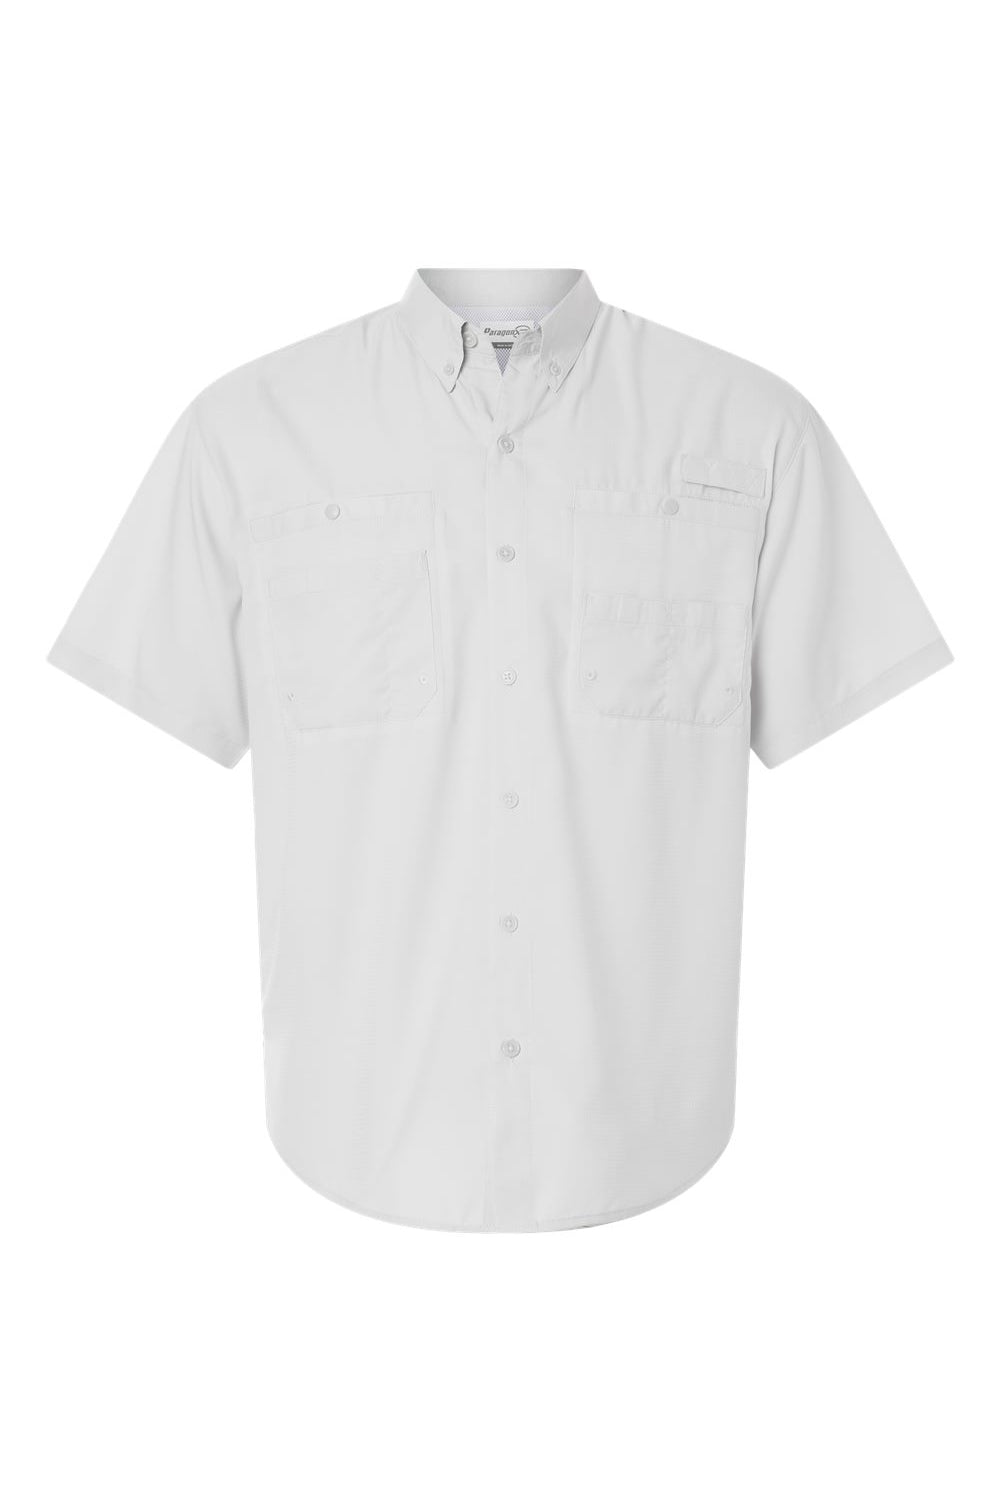 Paragon 700 Mens Hatteras Performance Short Sleeve Button Down Shirt Aluminum Grey Flat Front